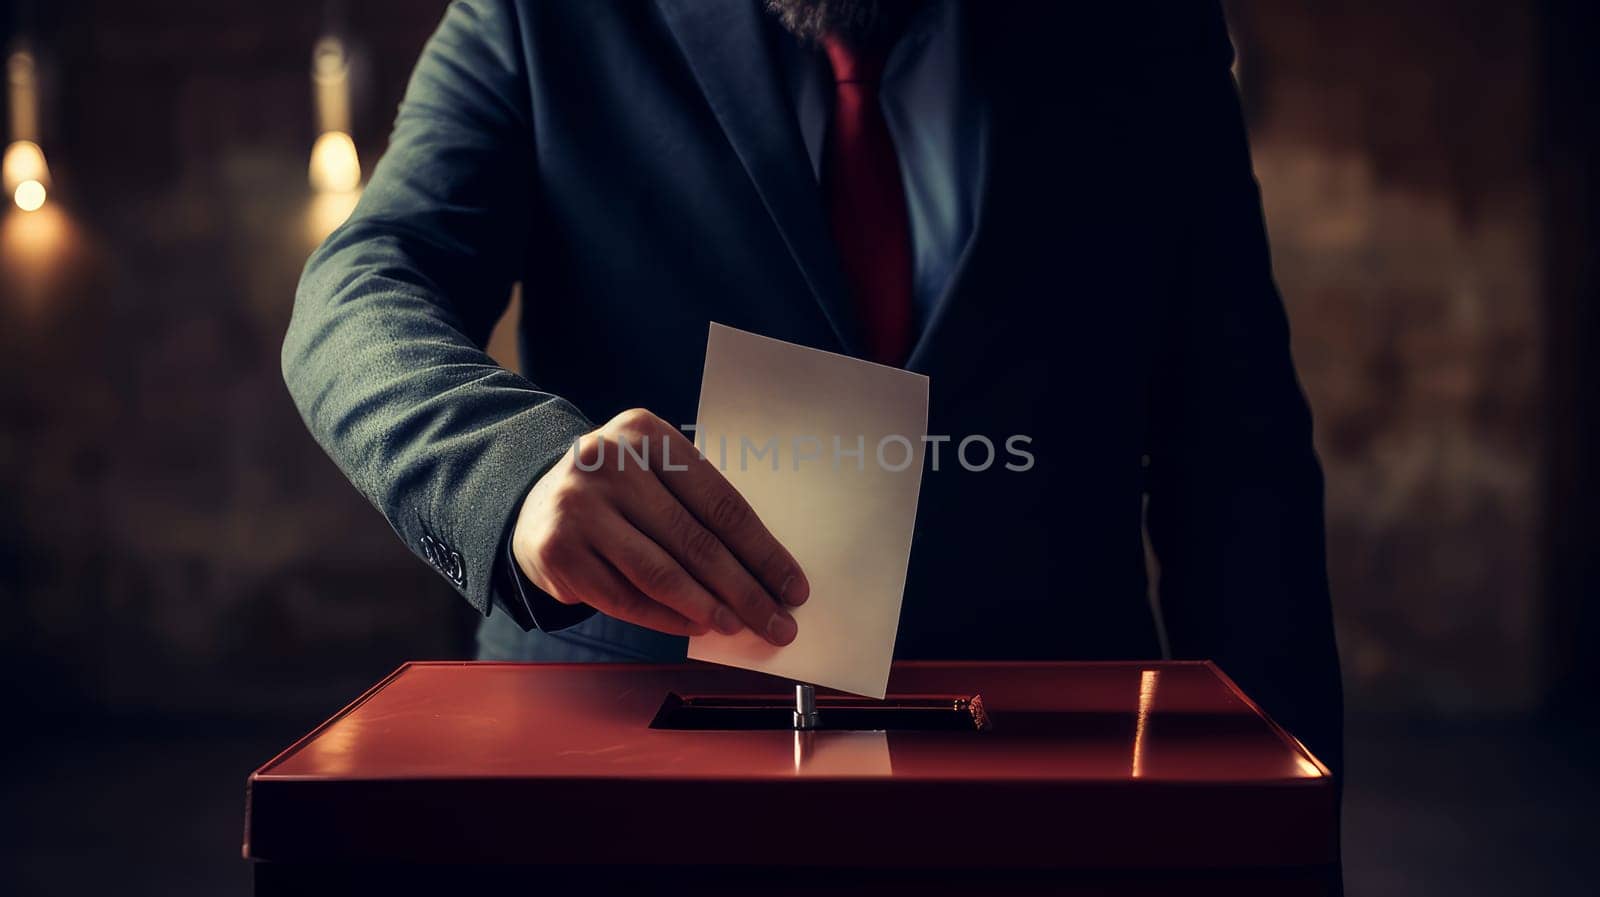 A man puts a ballot into the ballot box voting in the election by Alla_Yurtayeva